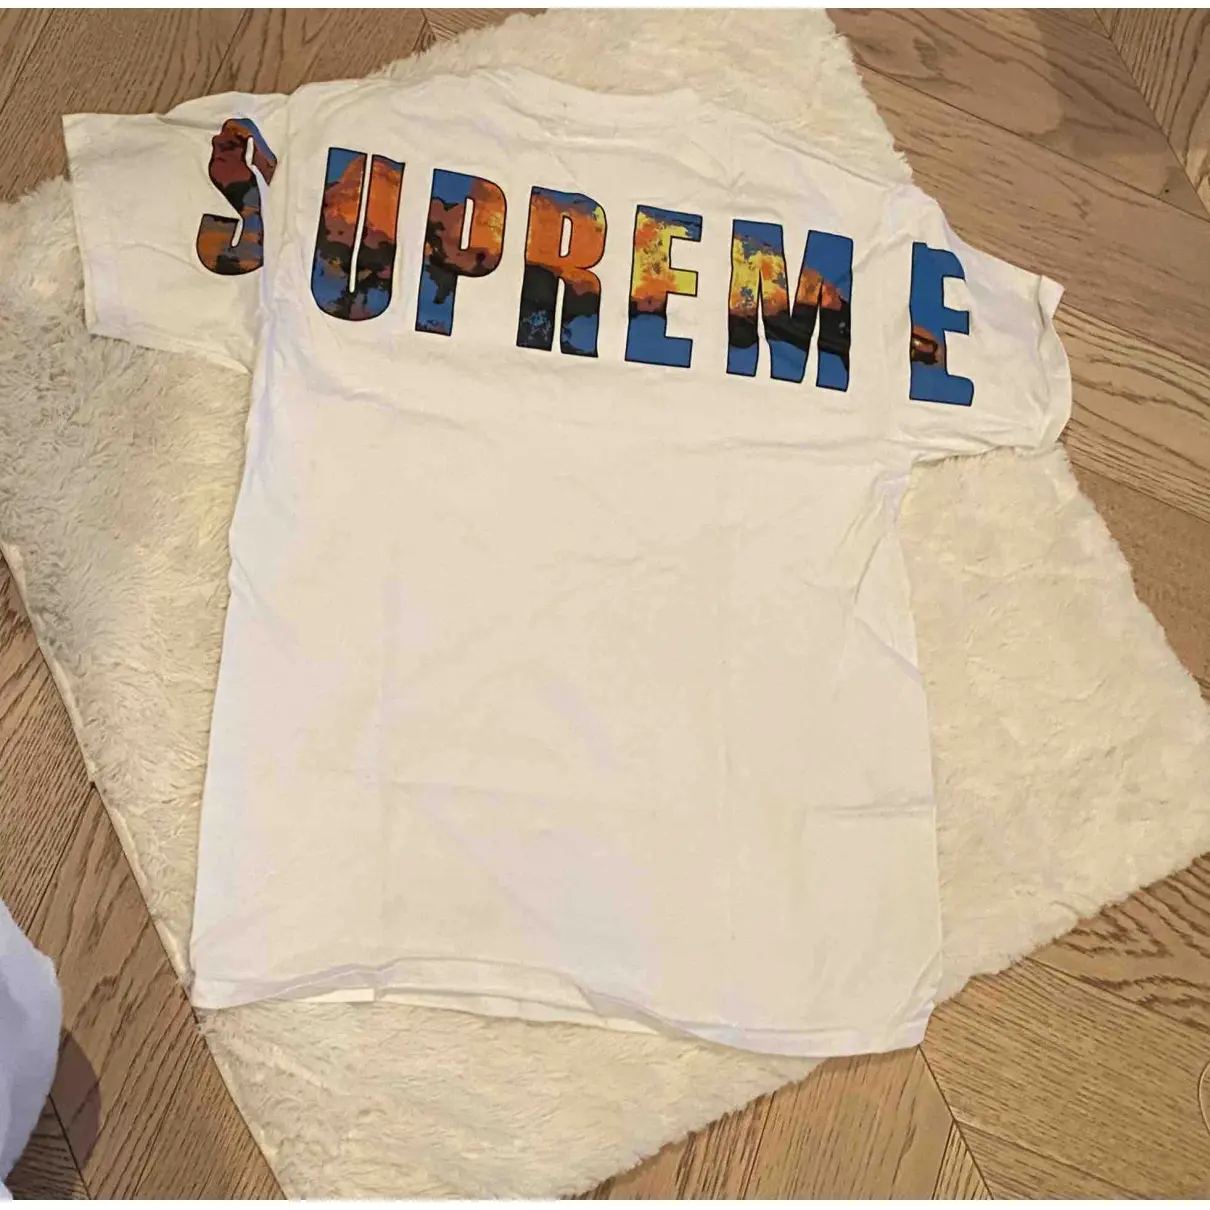 Buy Supreme T-shirt online